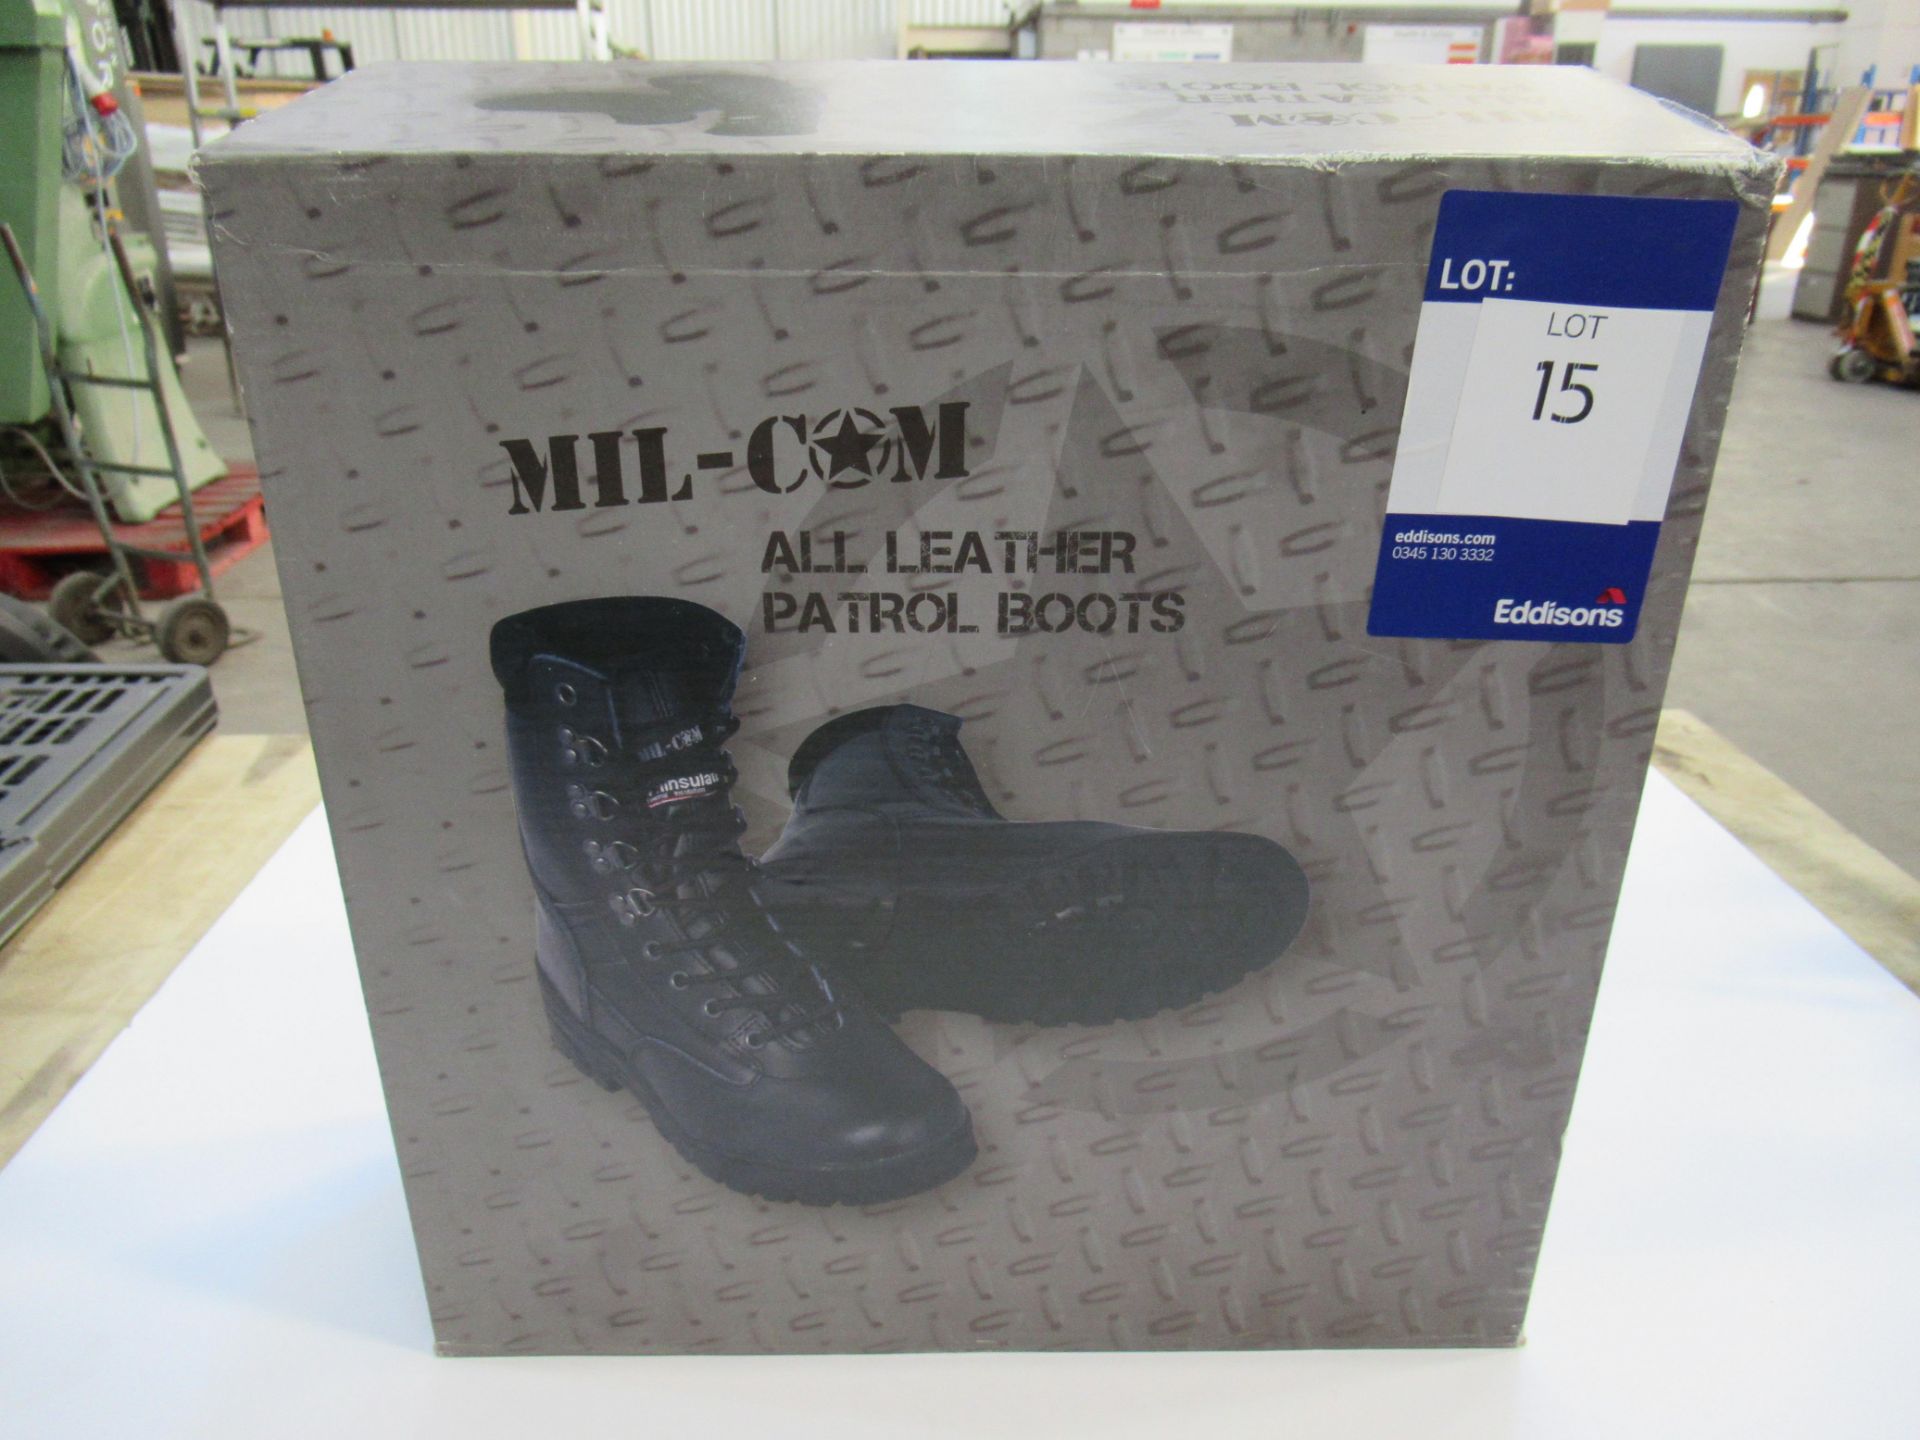 Mil-com all leather patrol boots, black, size 9UK